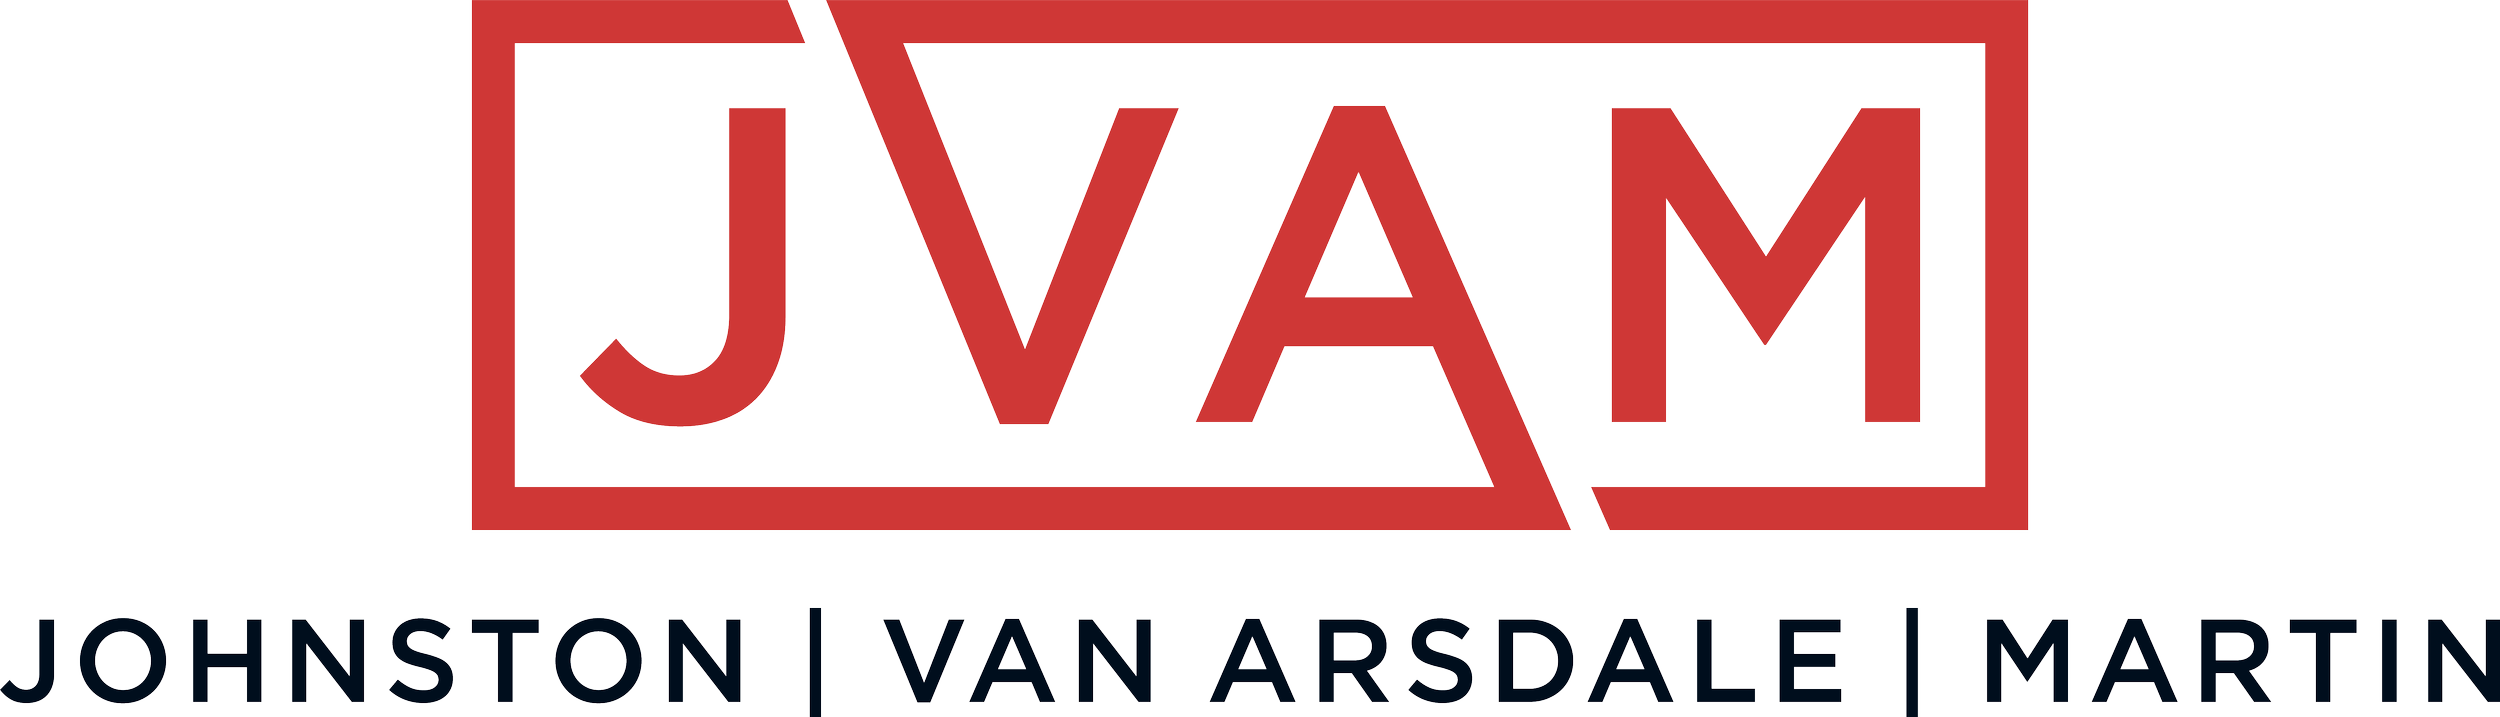 Copy of JVAM-Logo-Transparent-Full (1).png